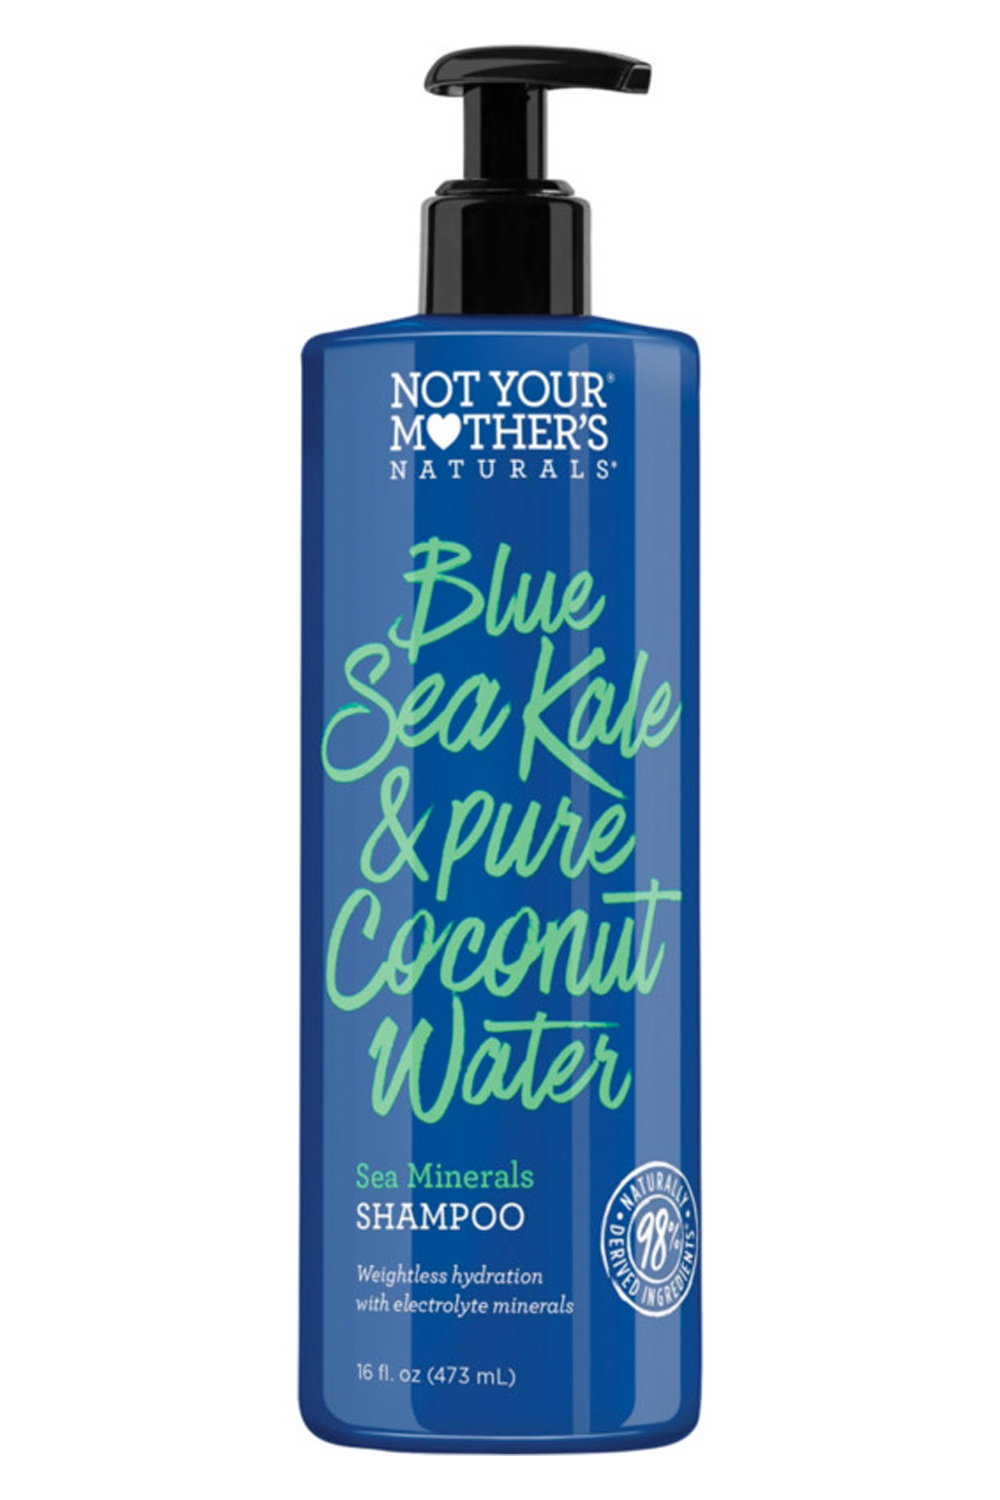 NYM's Blue Sea Kale & Pure Coconut Water Shampoo